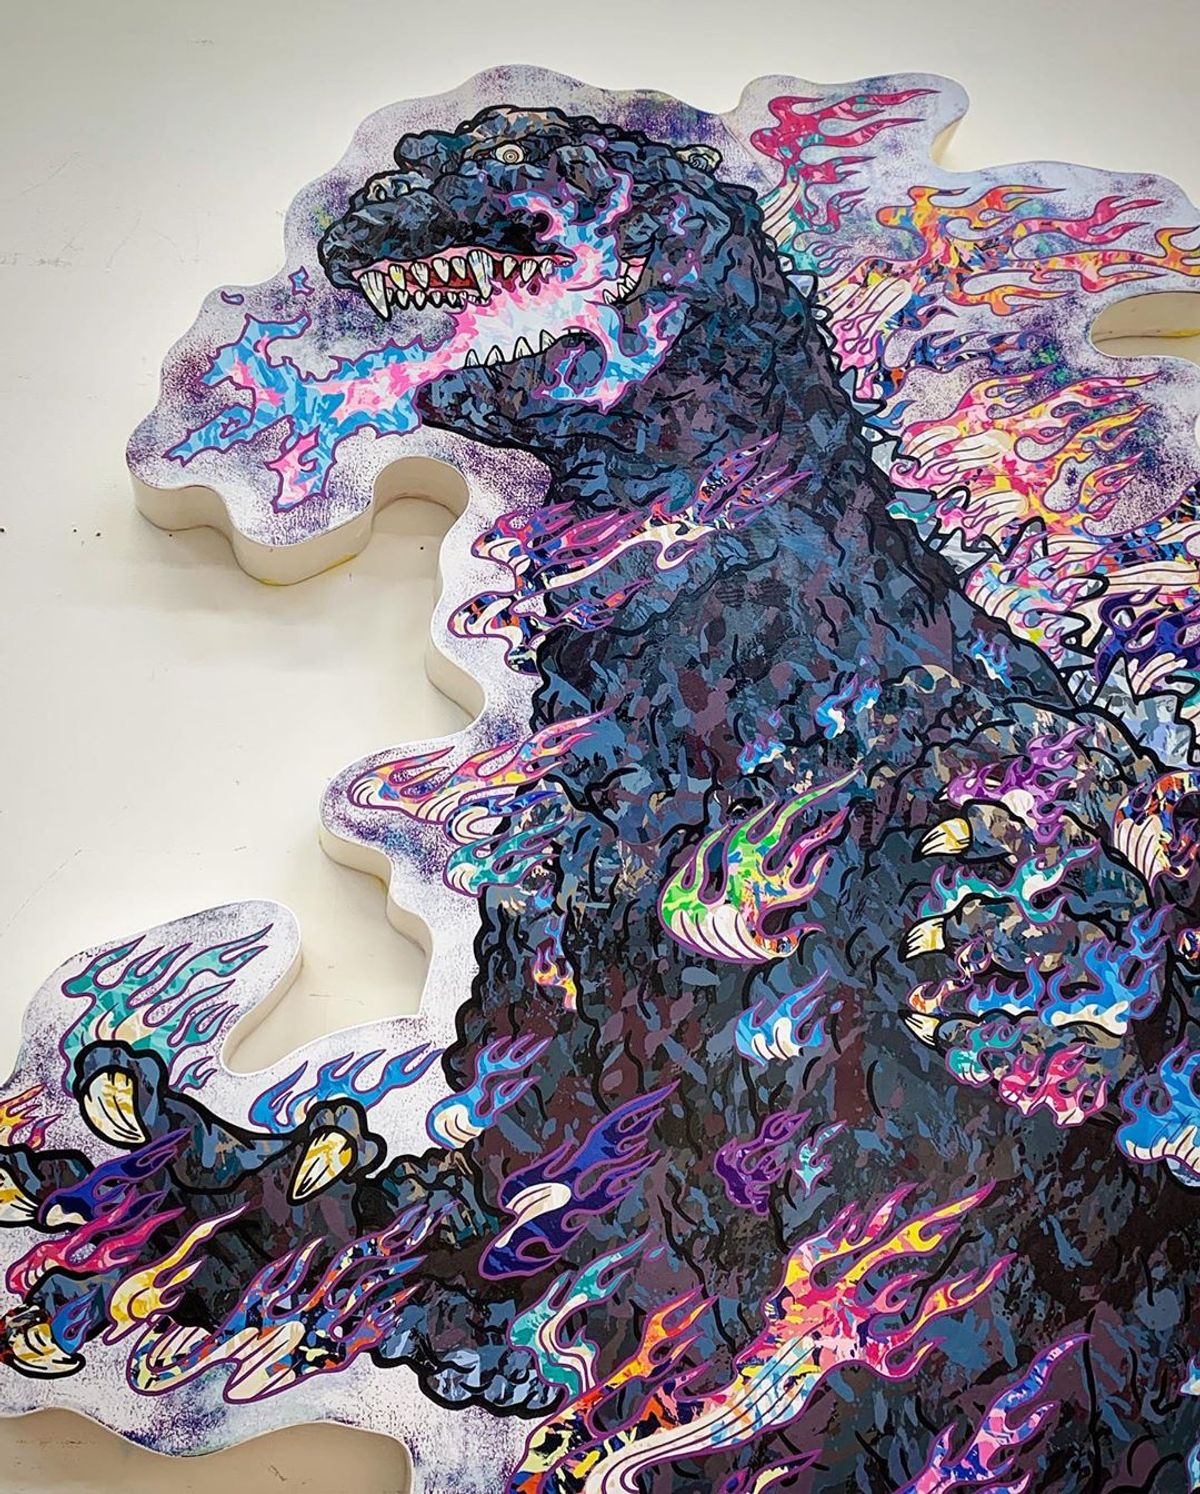 Murakami's portrait of Godzilla wreathed in flames © Takashi Murakami